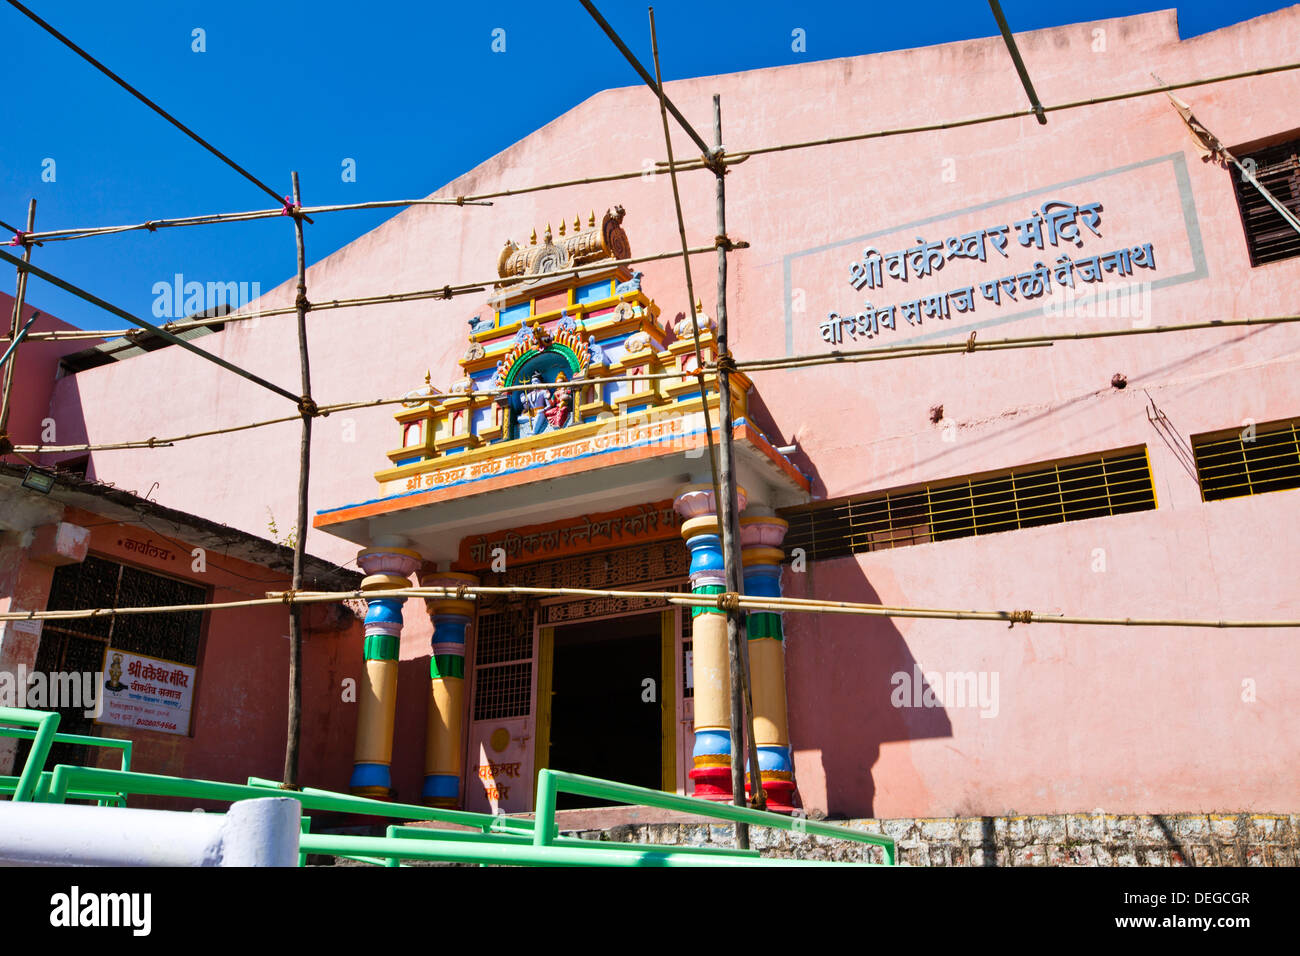 Ingresso di un tempio, Parli Vaijnath tempio, Parli Vaijnath, Beed, Maharashtra, India Foto Stock